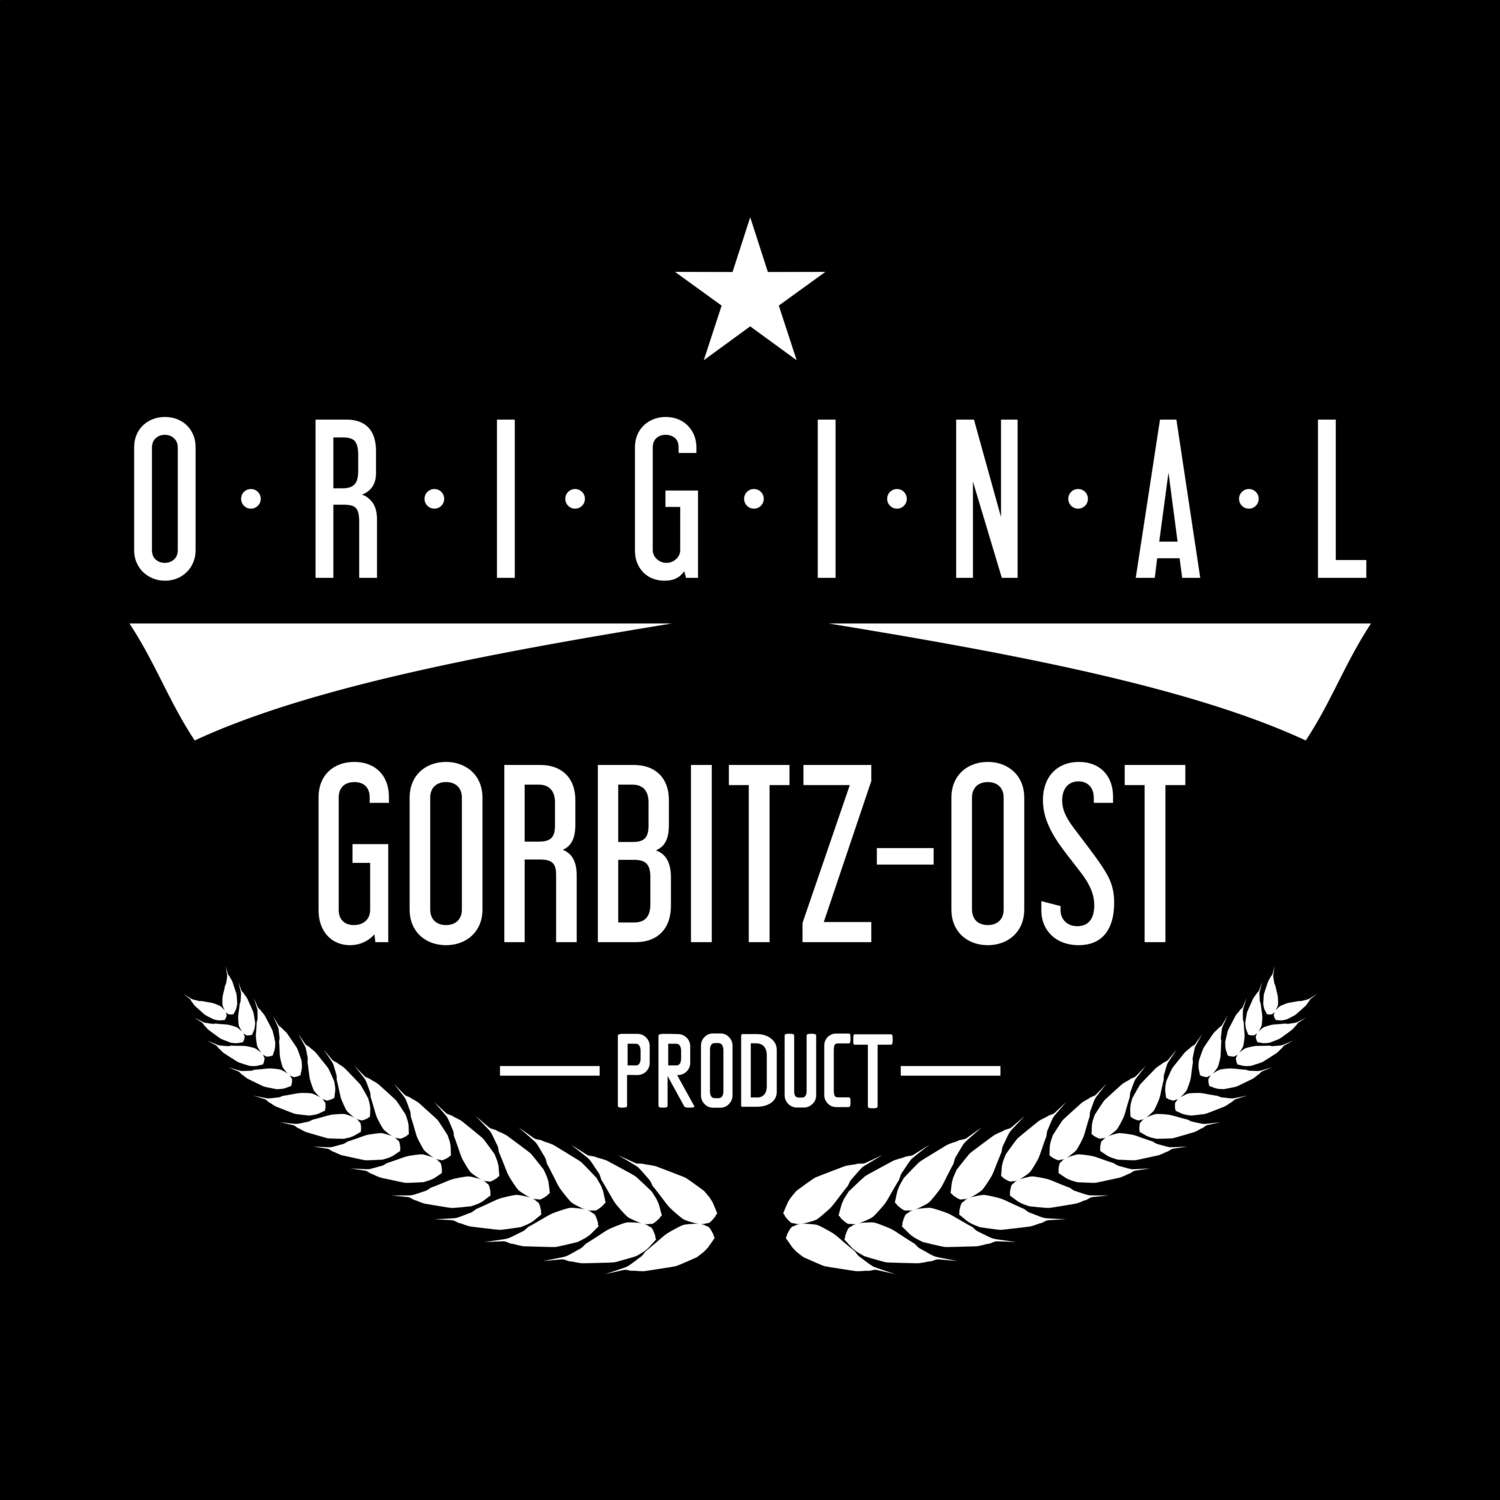 Gorbitz-Ost T-Shirt »Original Product«